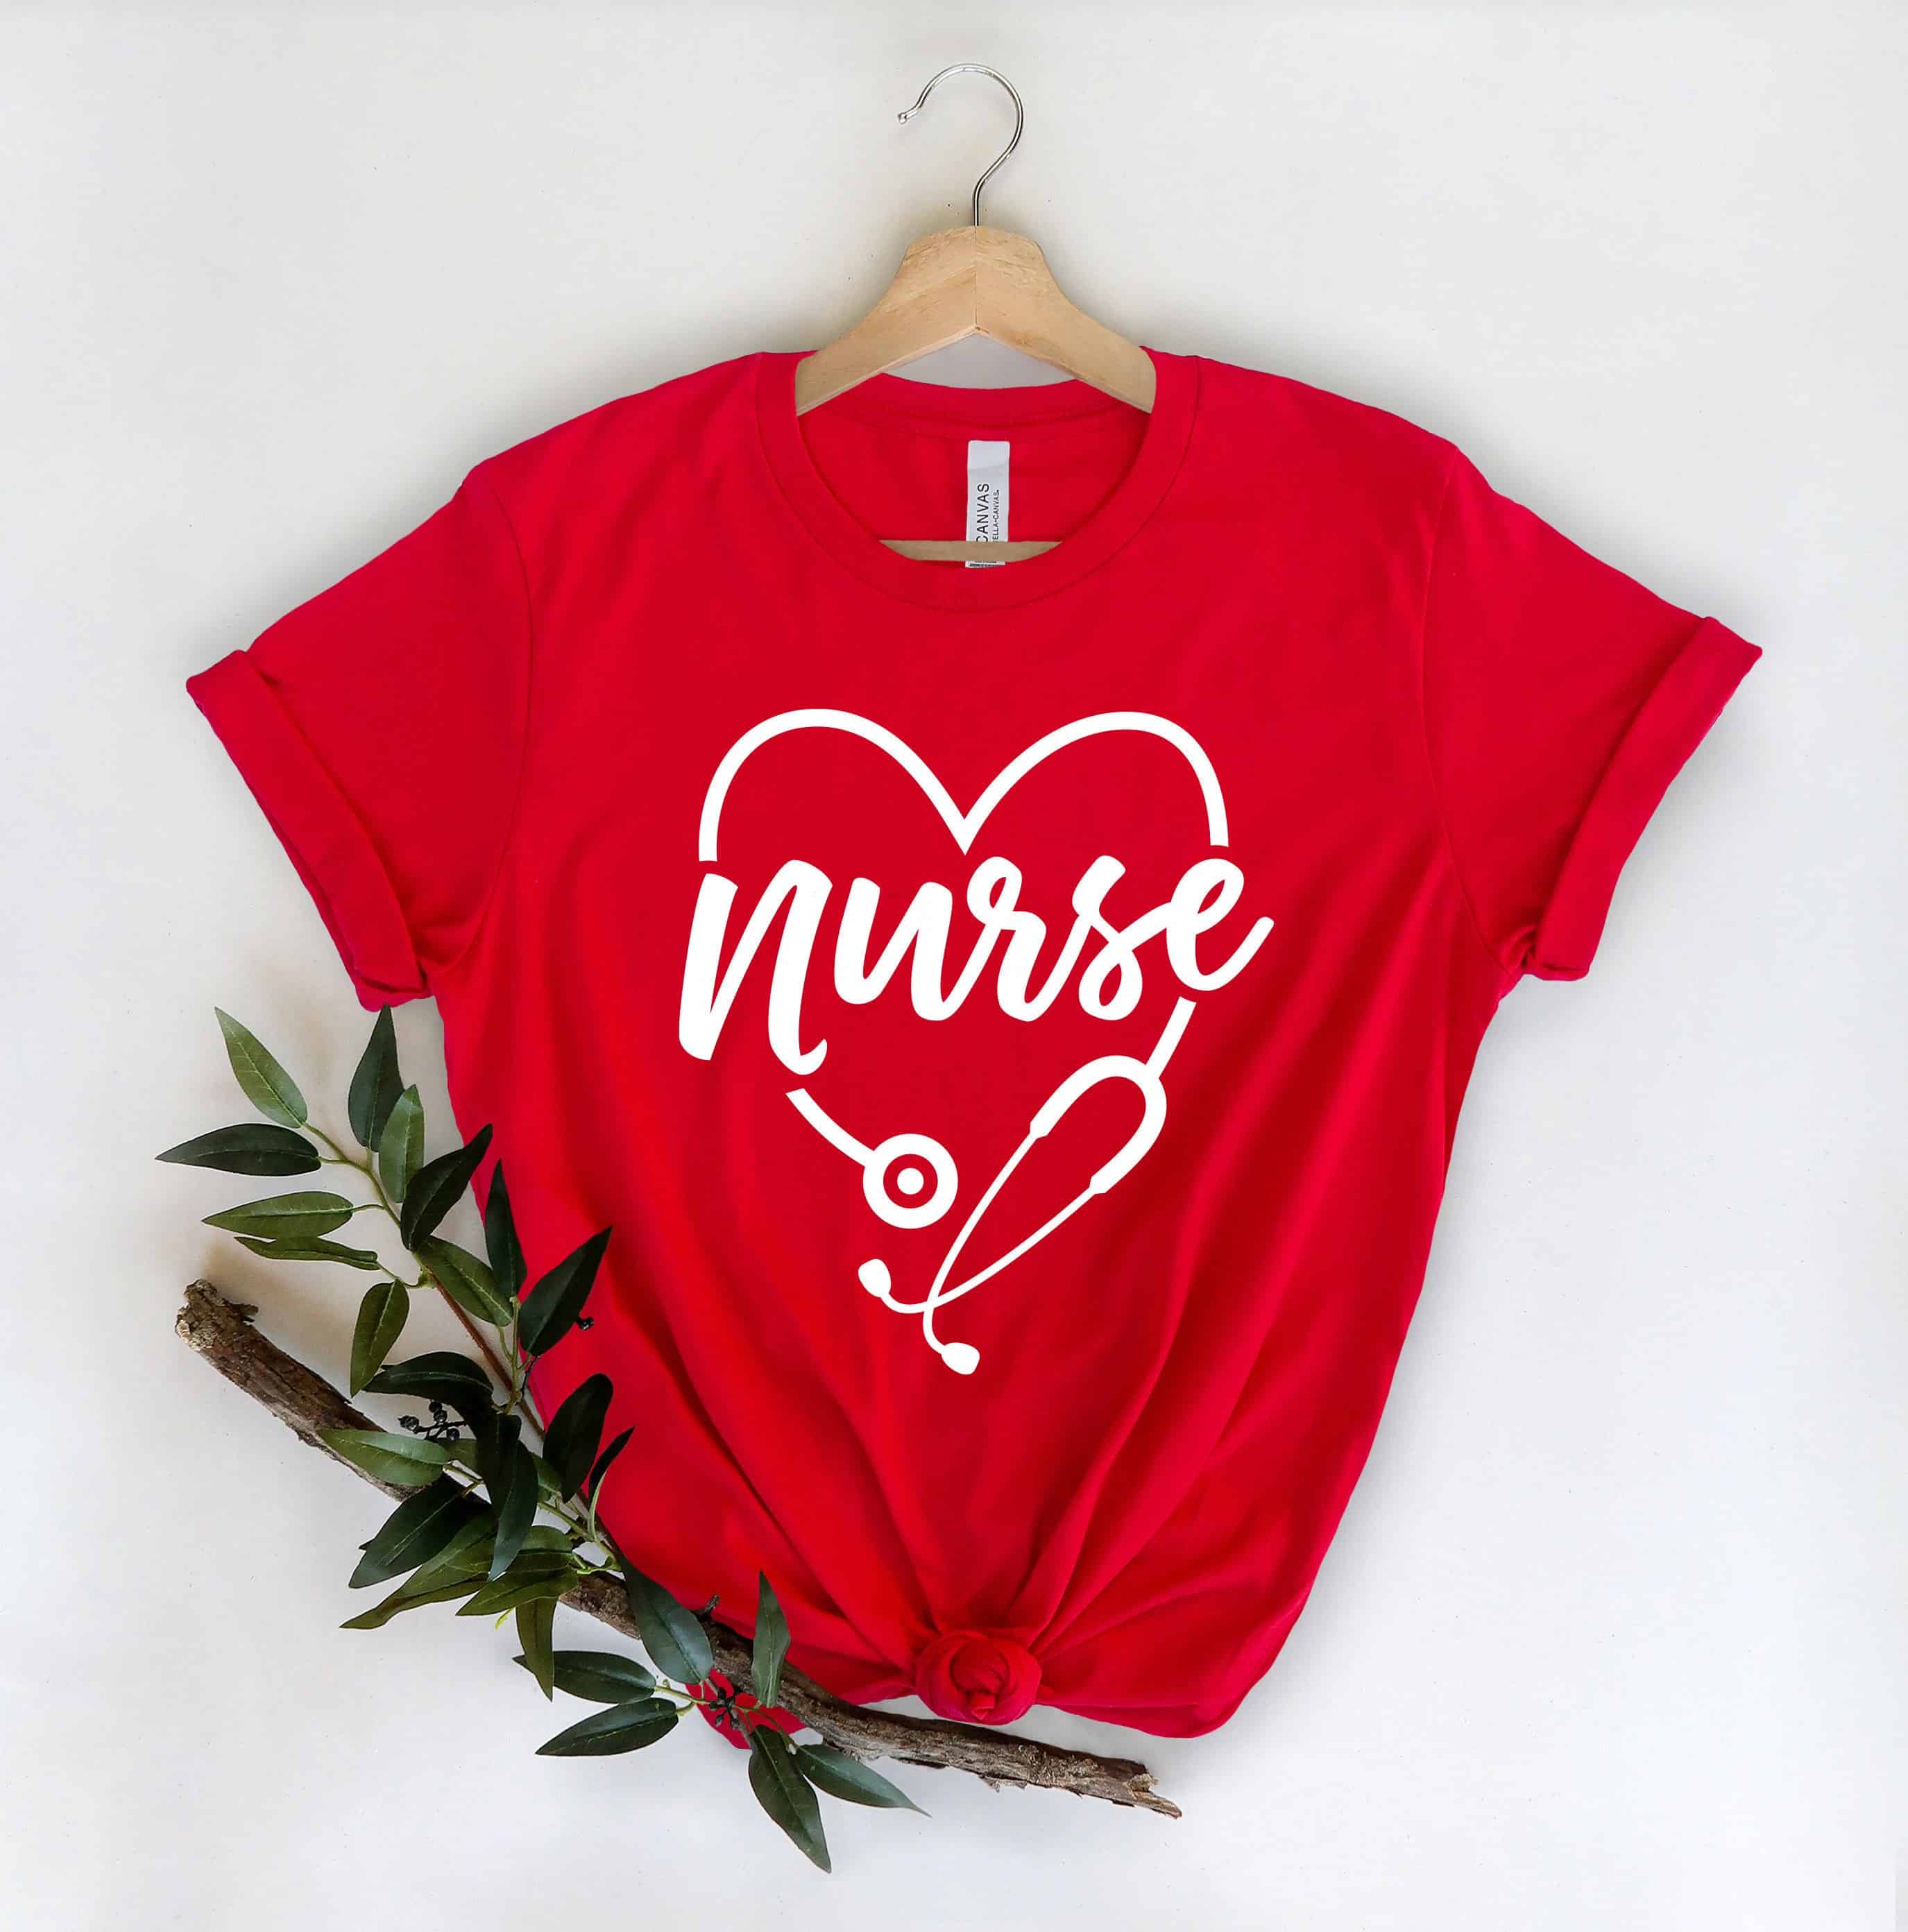 Nurse Life Nurse Appreciation Registered Nurse Nurse Husband Nurse Wife Gift For Husband Nurse TShirt Gift Nurse TShirt